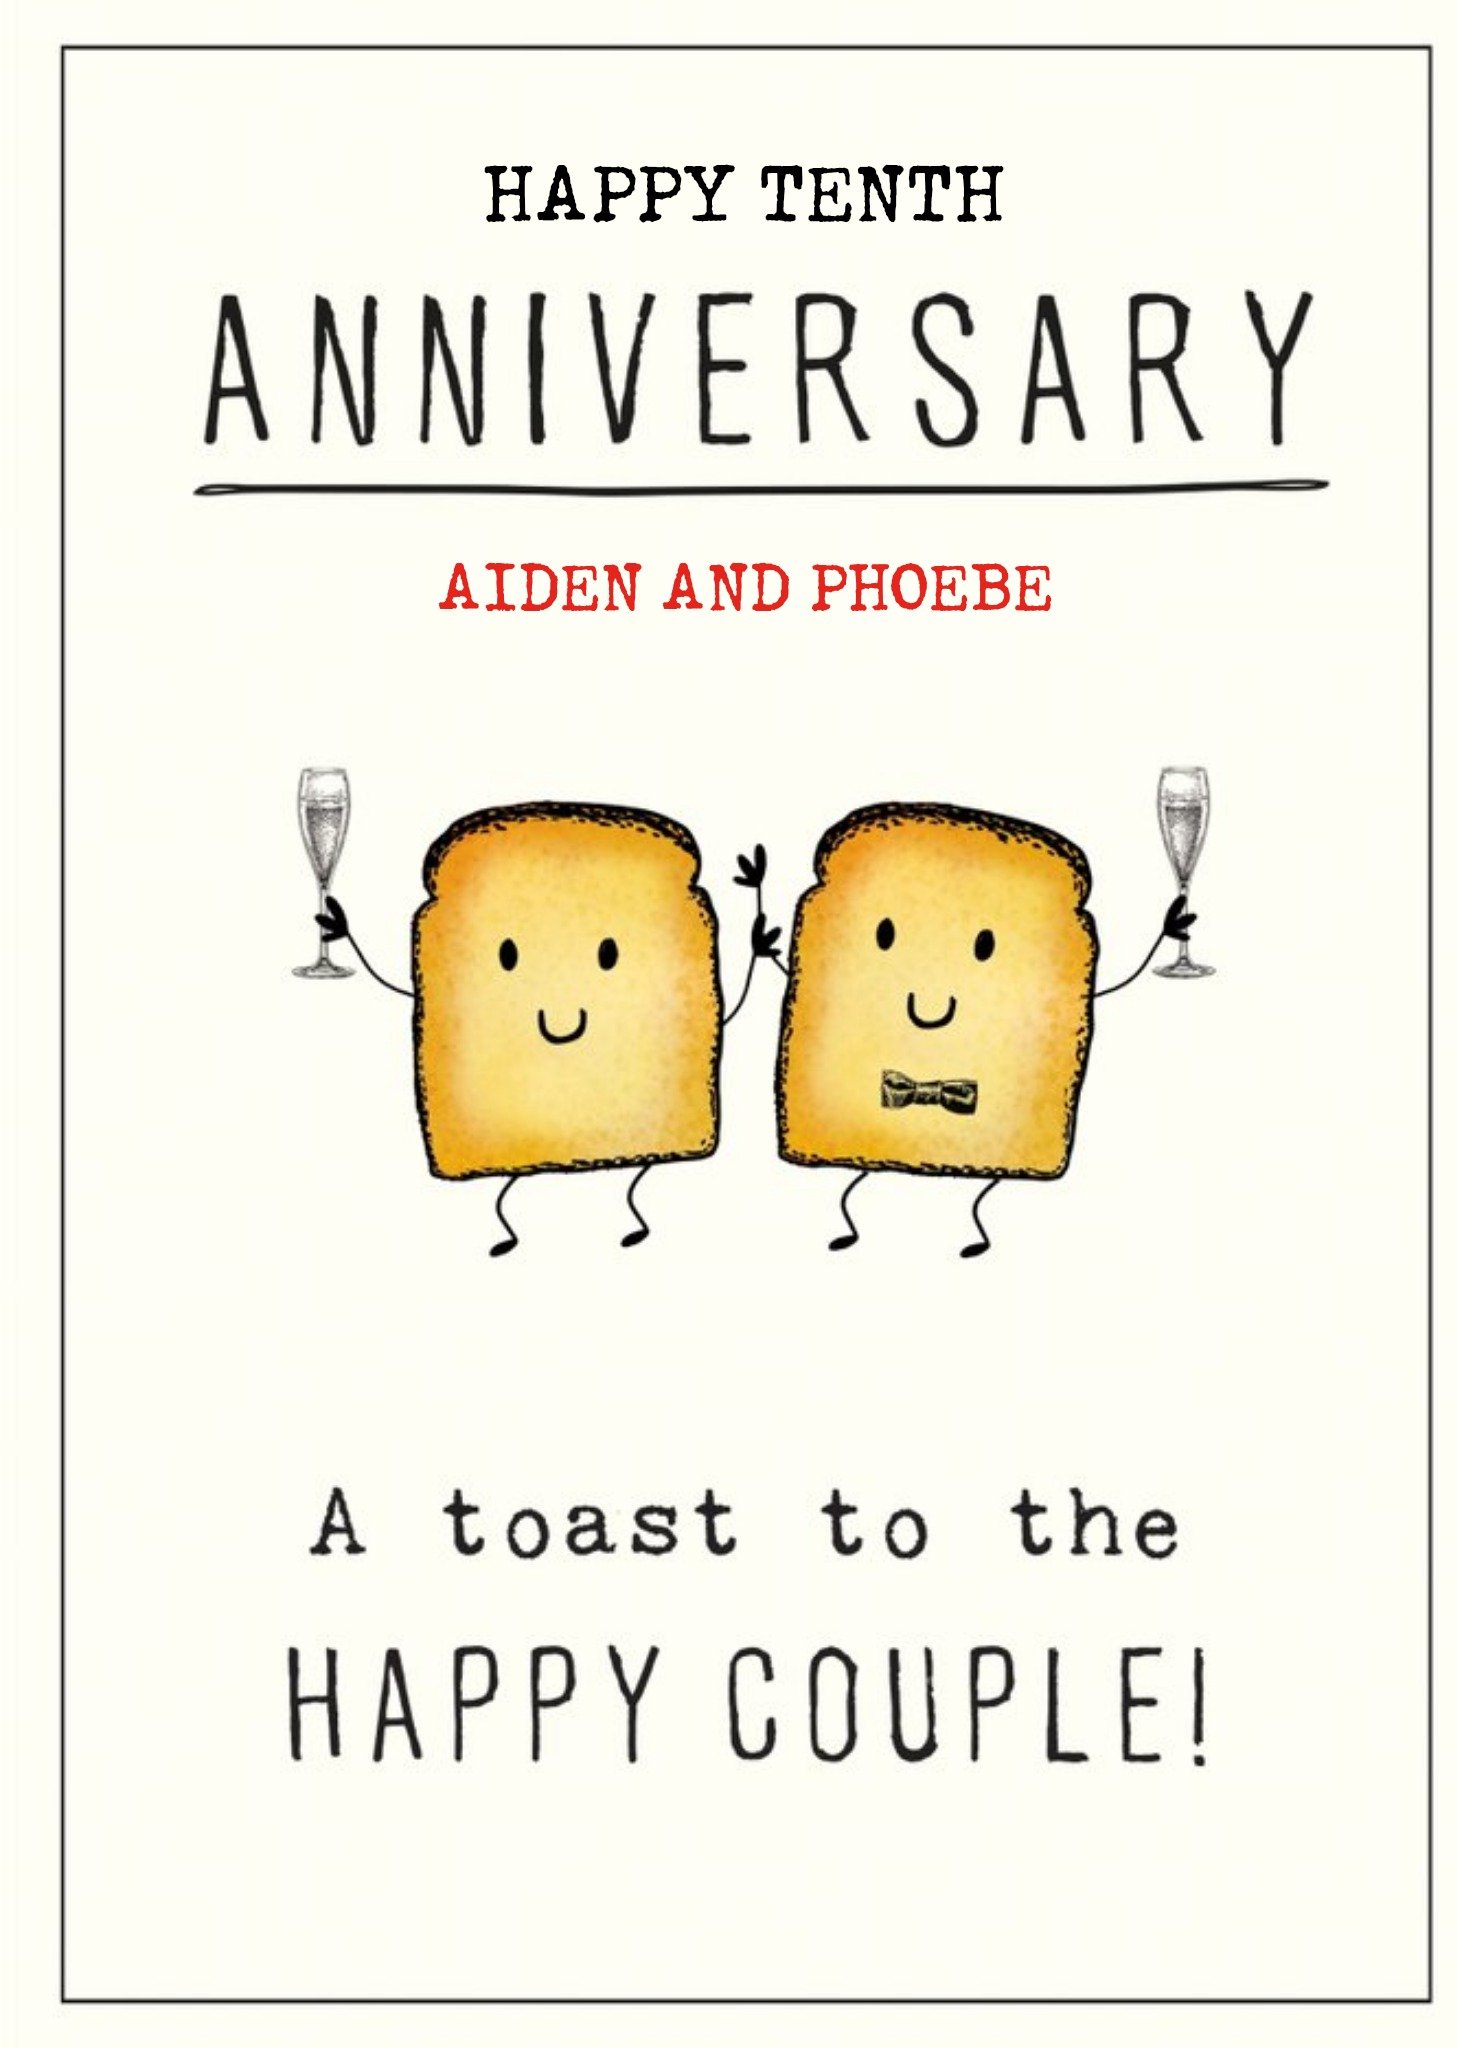 Moonpig Cute Illustrative Champagne Toast Anniversary Pun Card Ecard